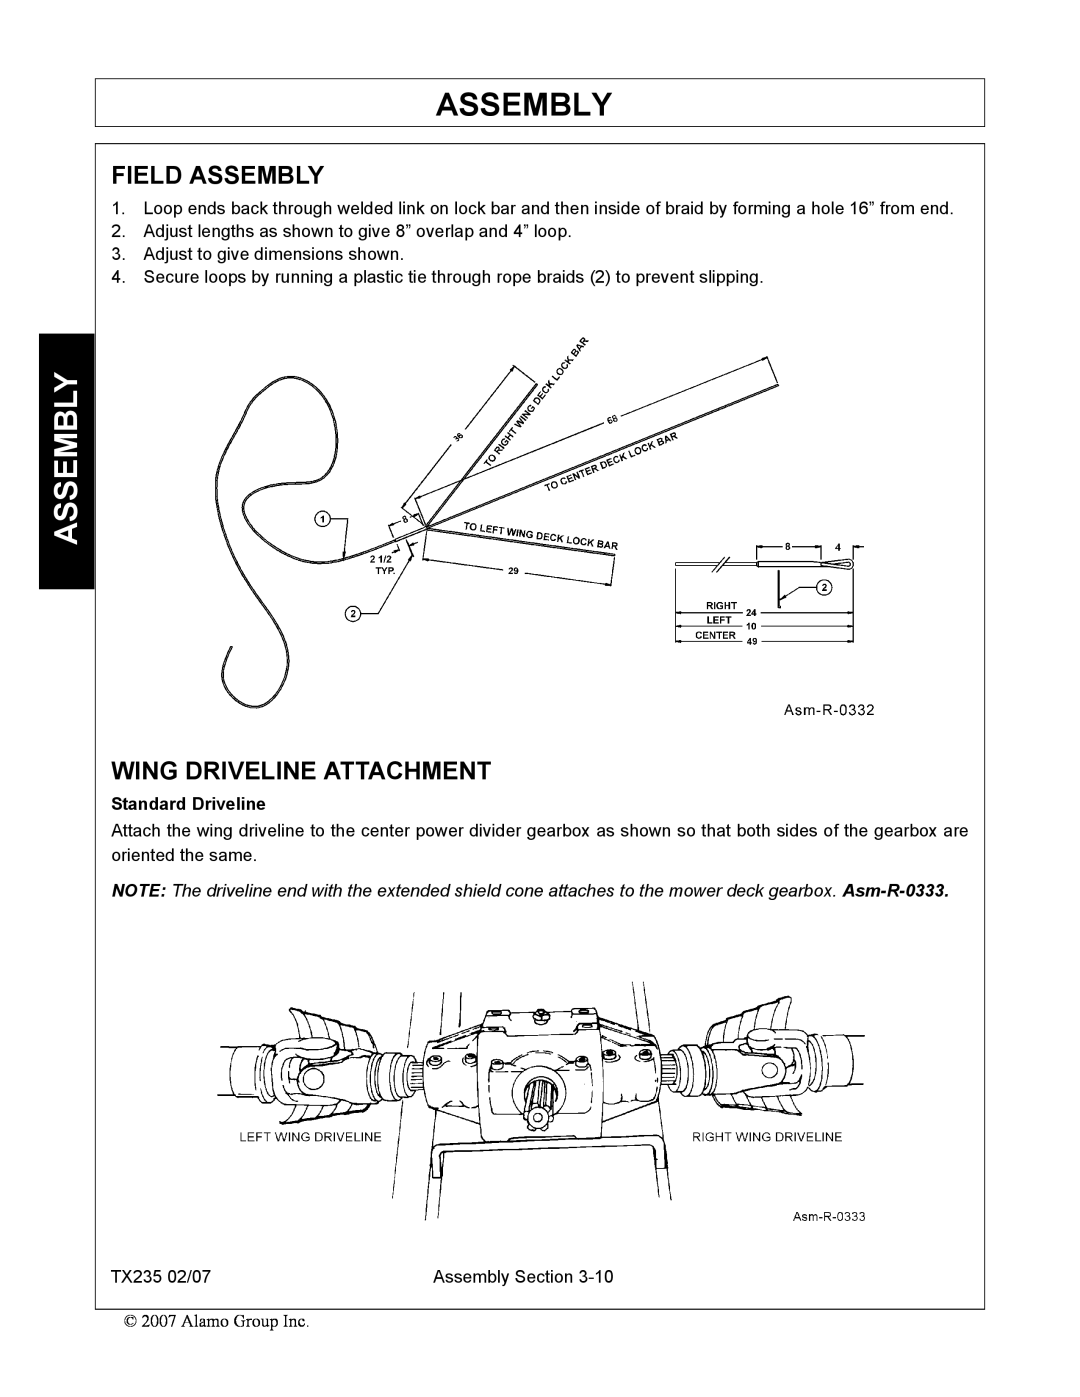 Alamo TX235 manual Field Assembly, Wing Driveline Attachment, Standard Driveline 